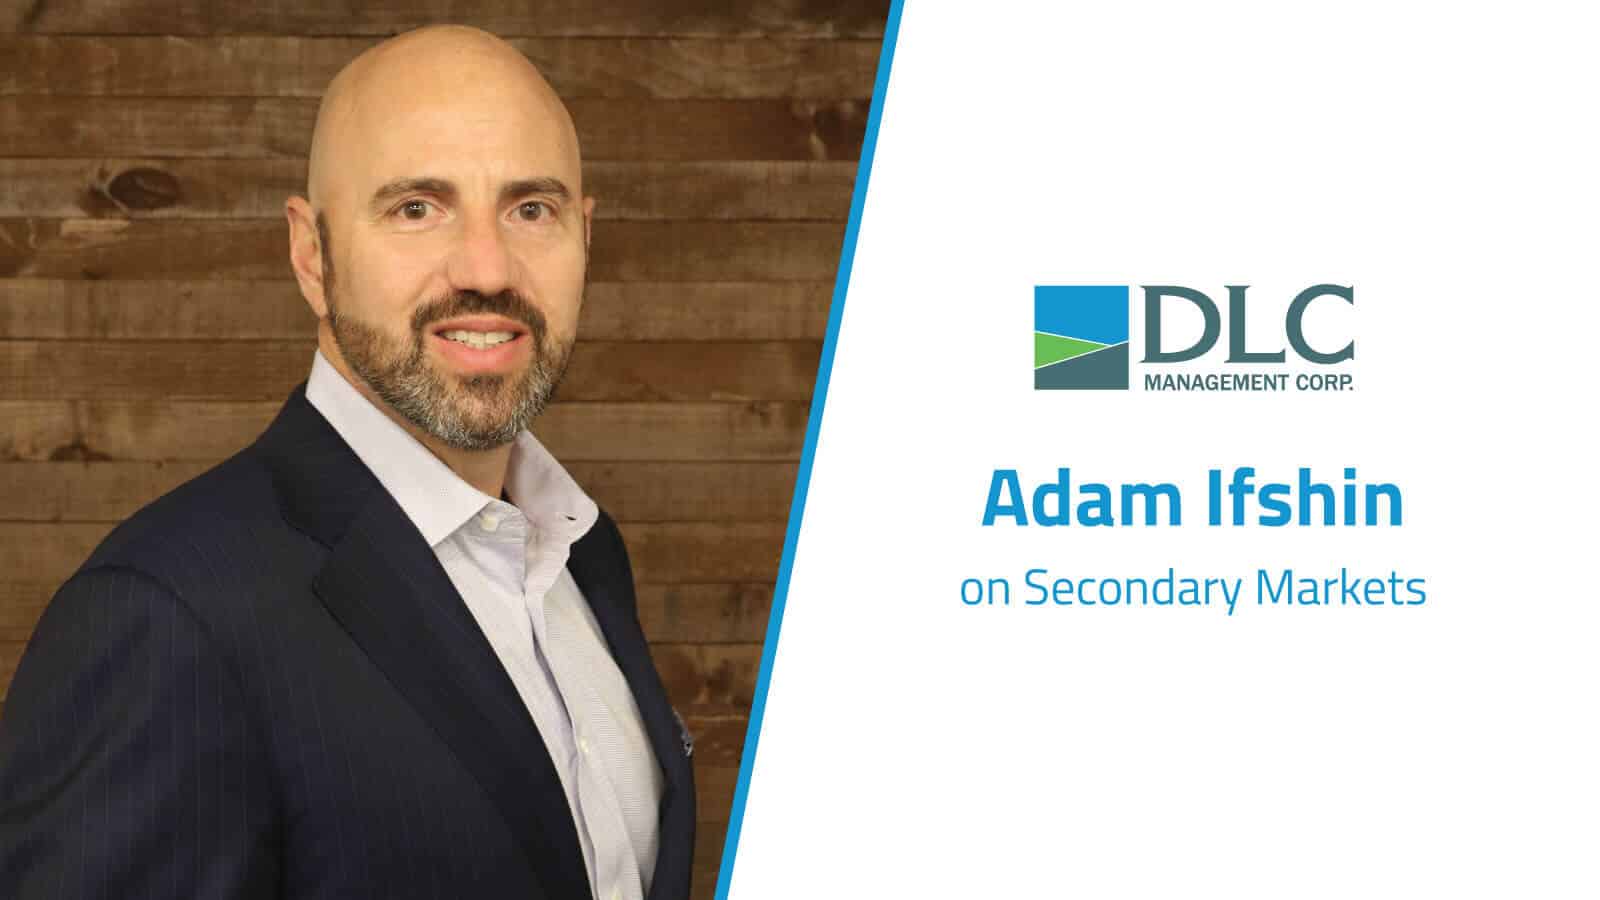 Adam Ifshin headshot with a graphic "Adam Ifshin on Secondary Markets"